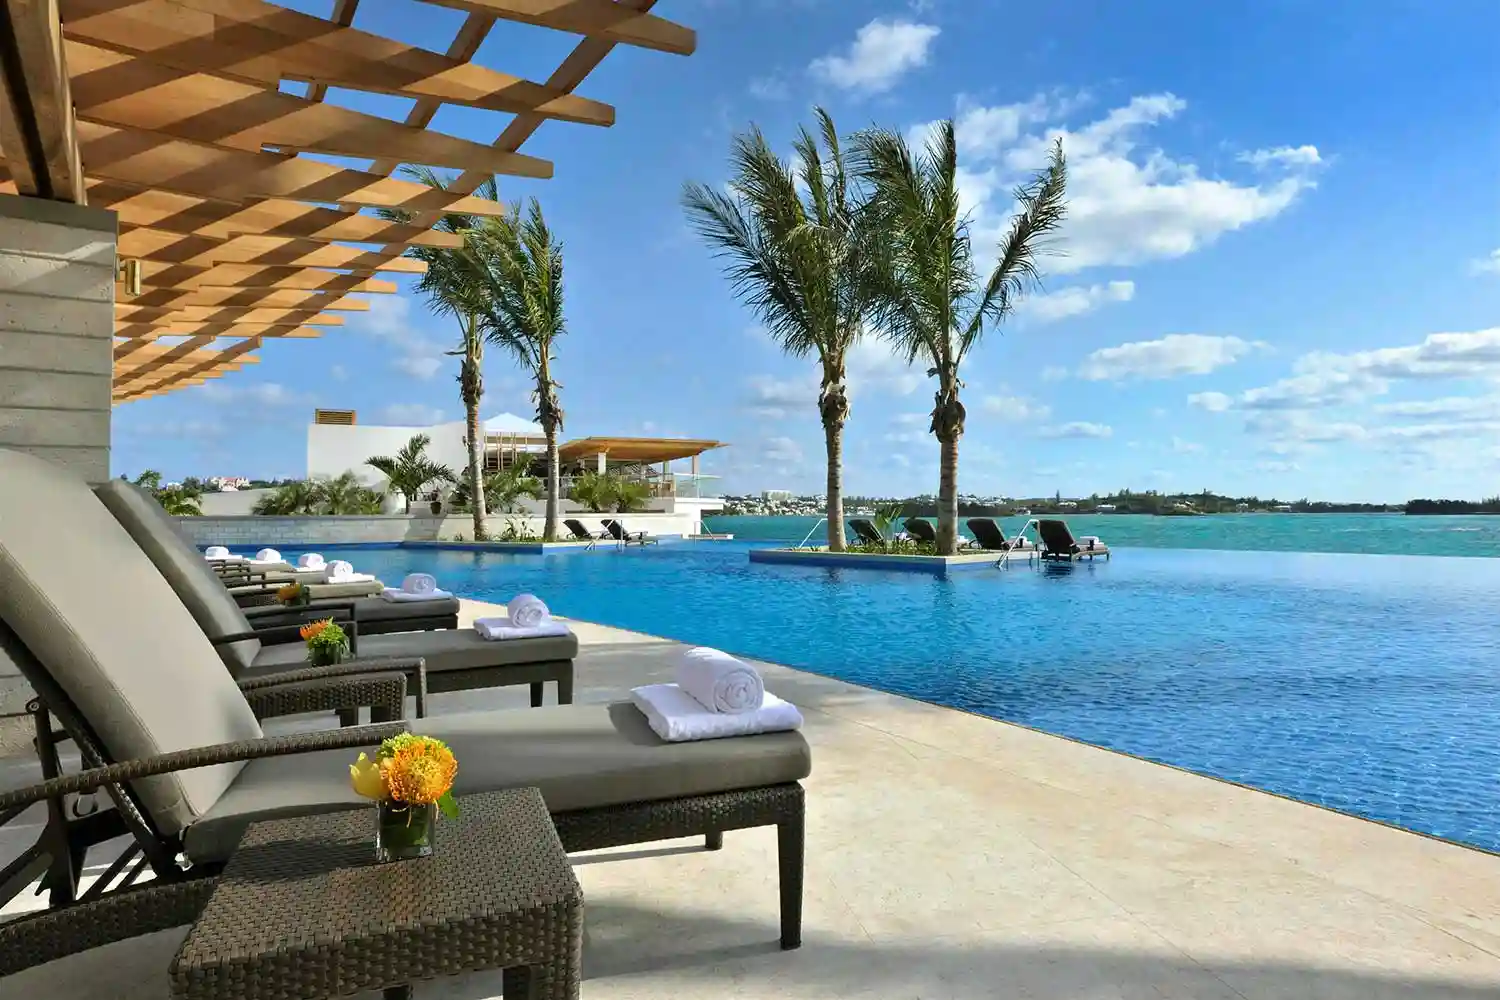 Top Star Rating Hotels In Bermuda